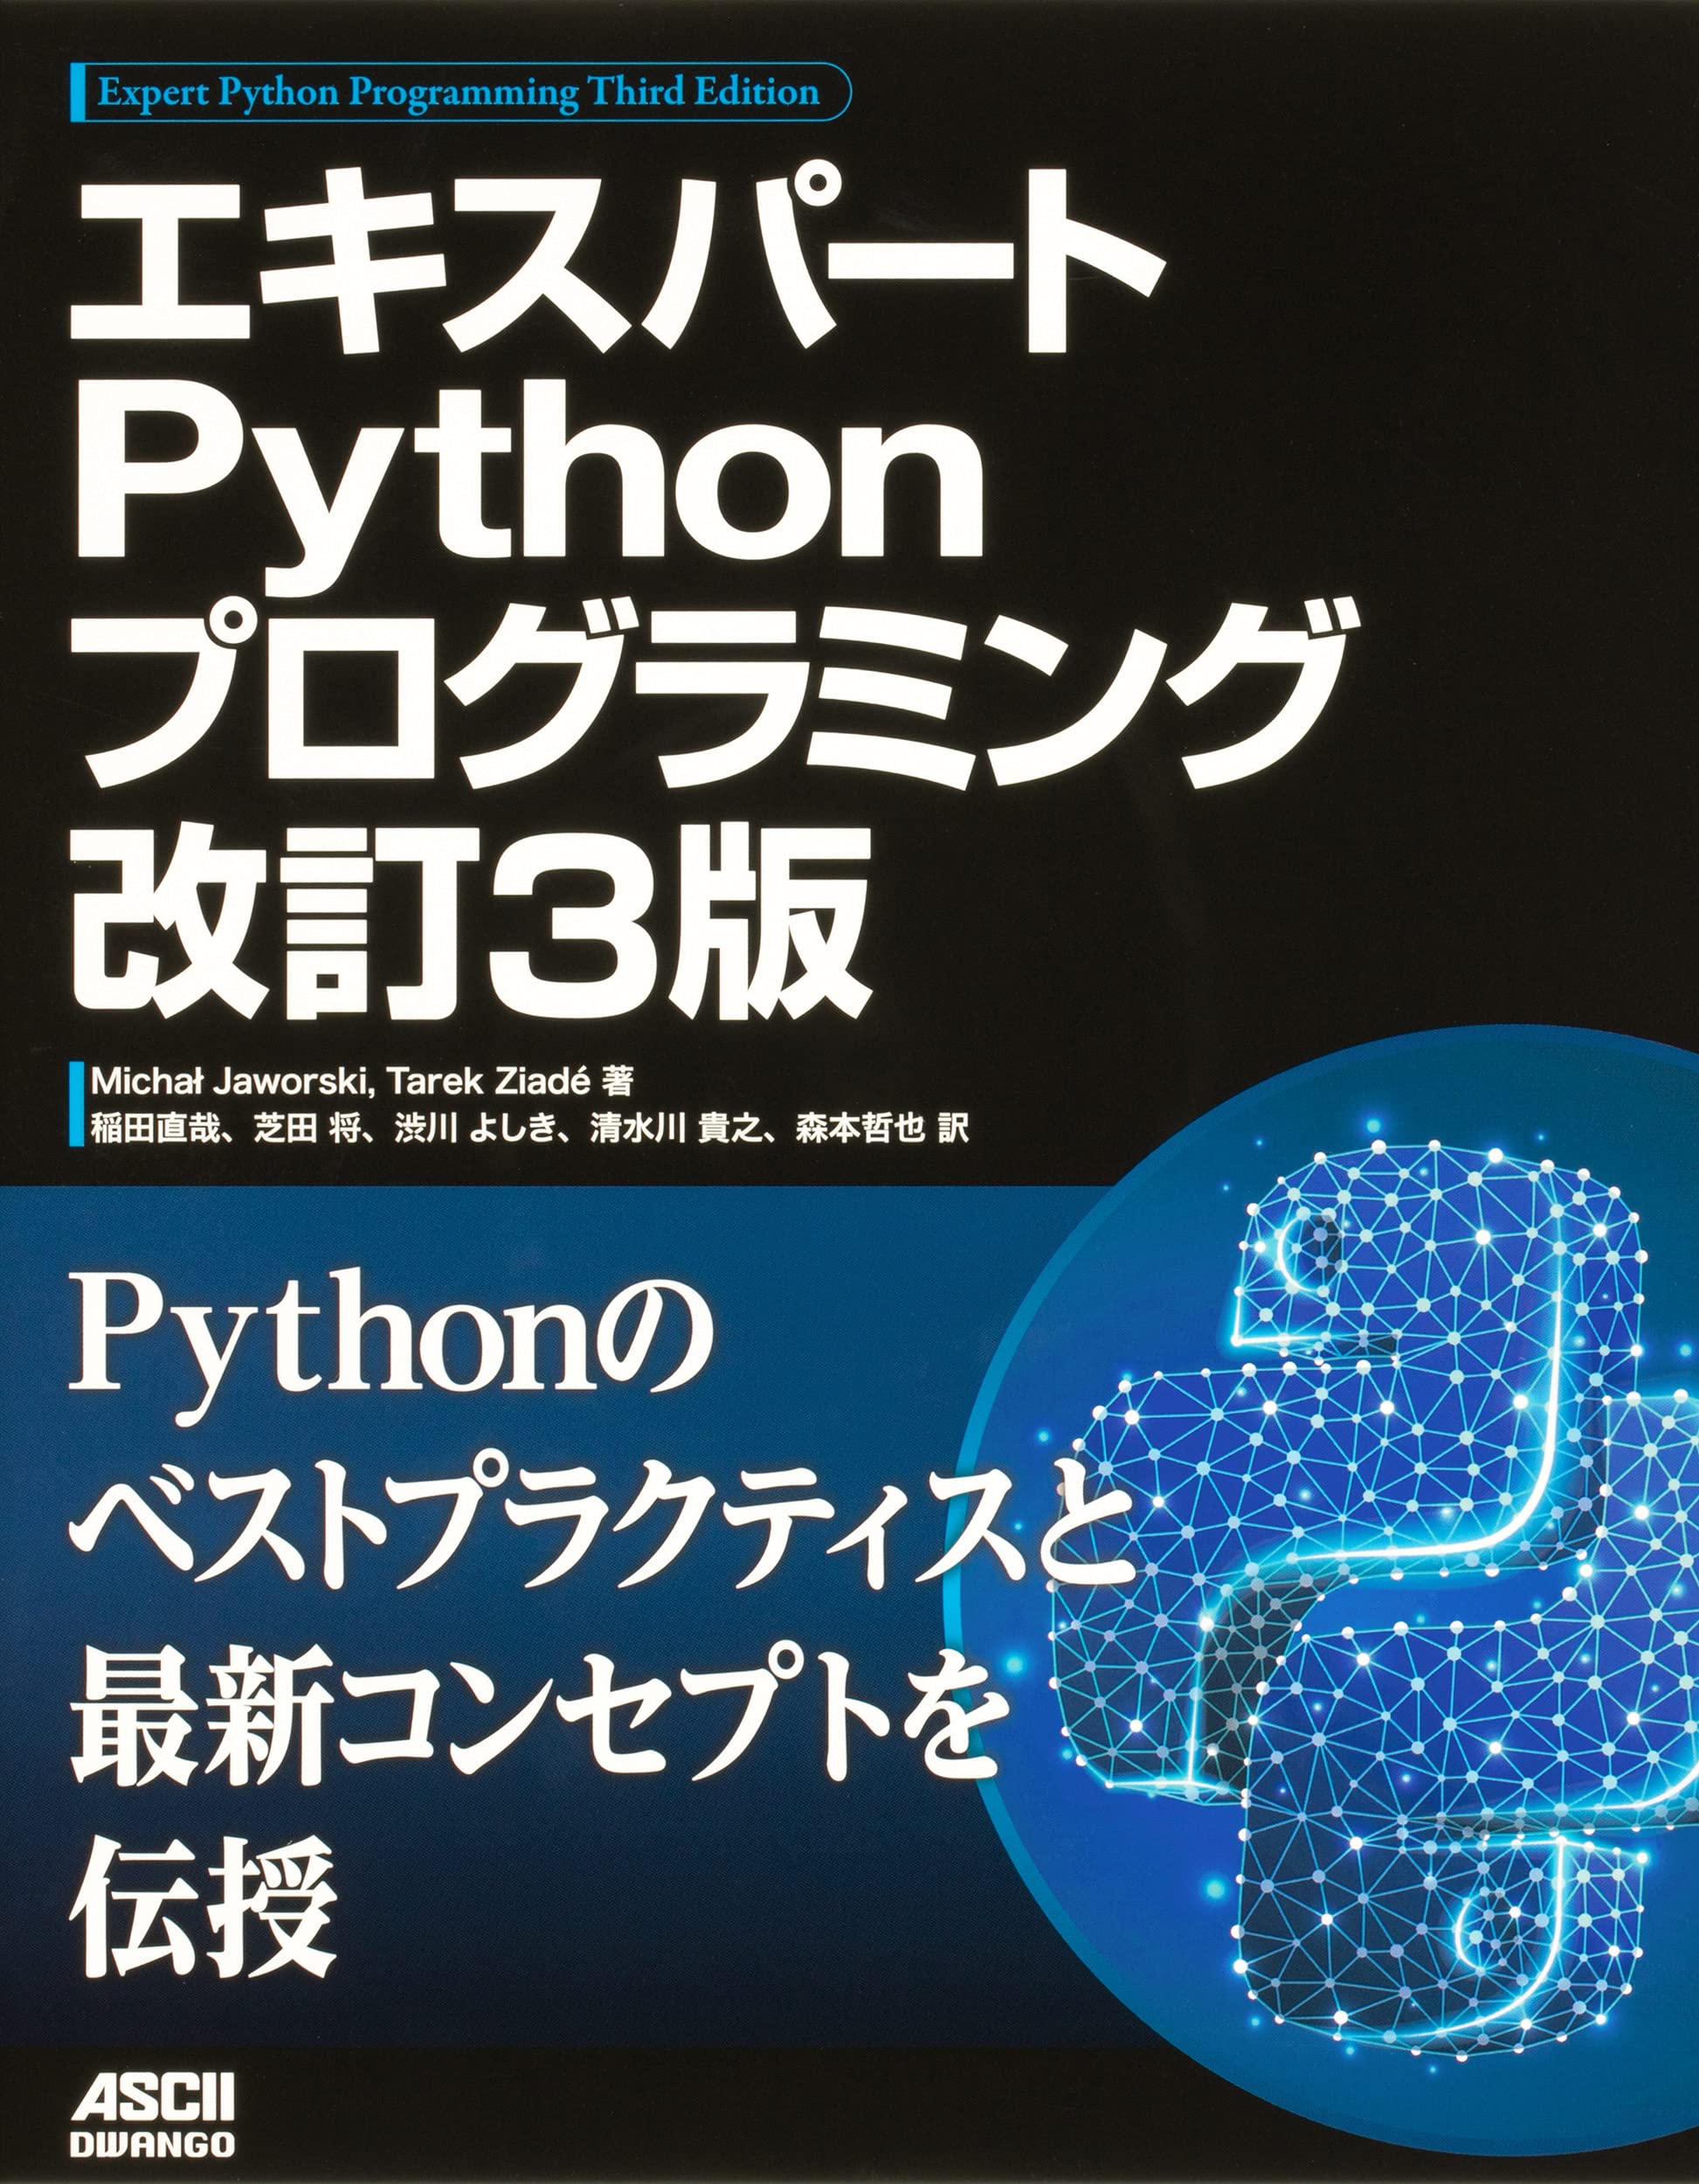 Effective Python Pythonプログラムを改良する59項目